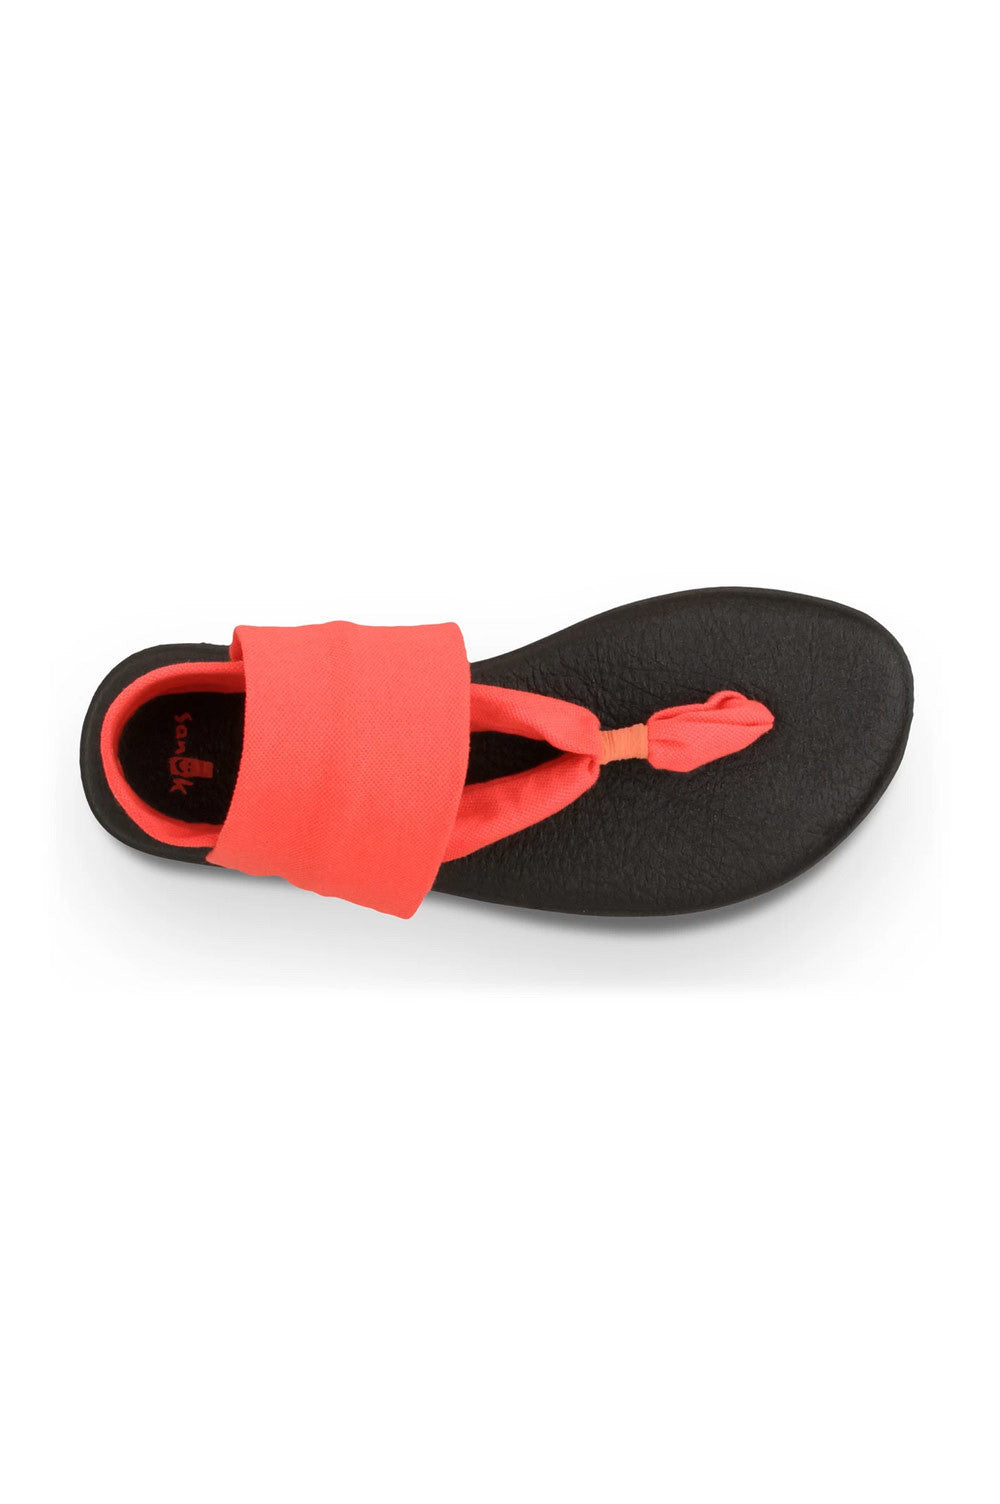 Sanuk Yoga Sling 2 Flip Flop Yoga Mat Footbed Sandals Women's Size 7